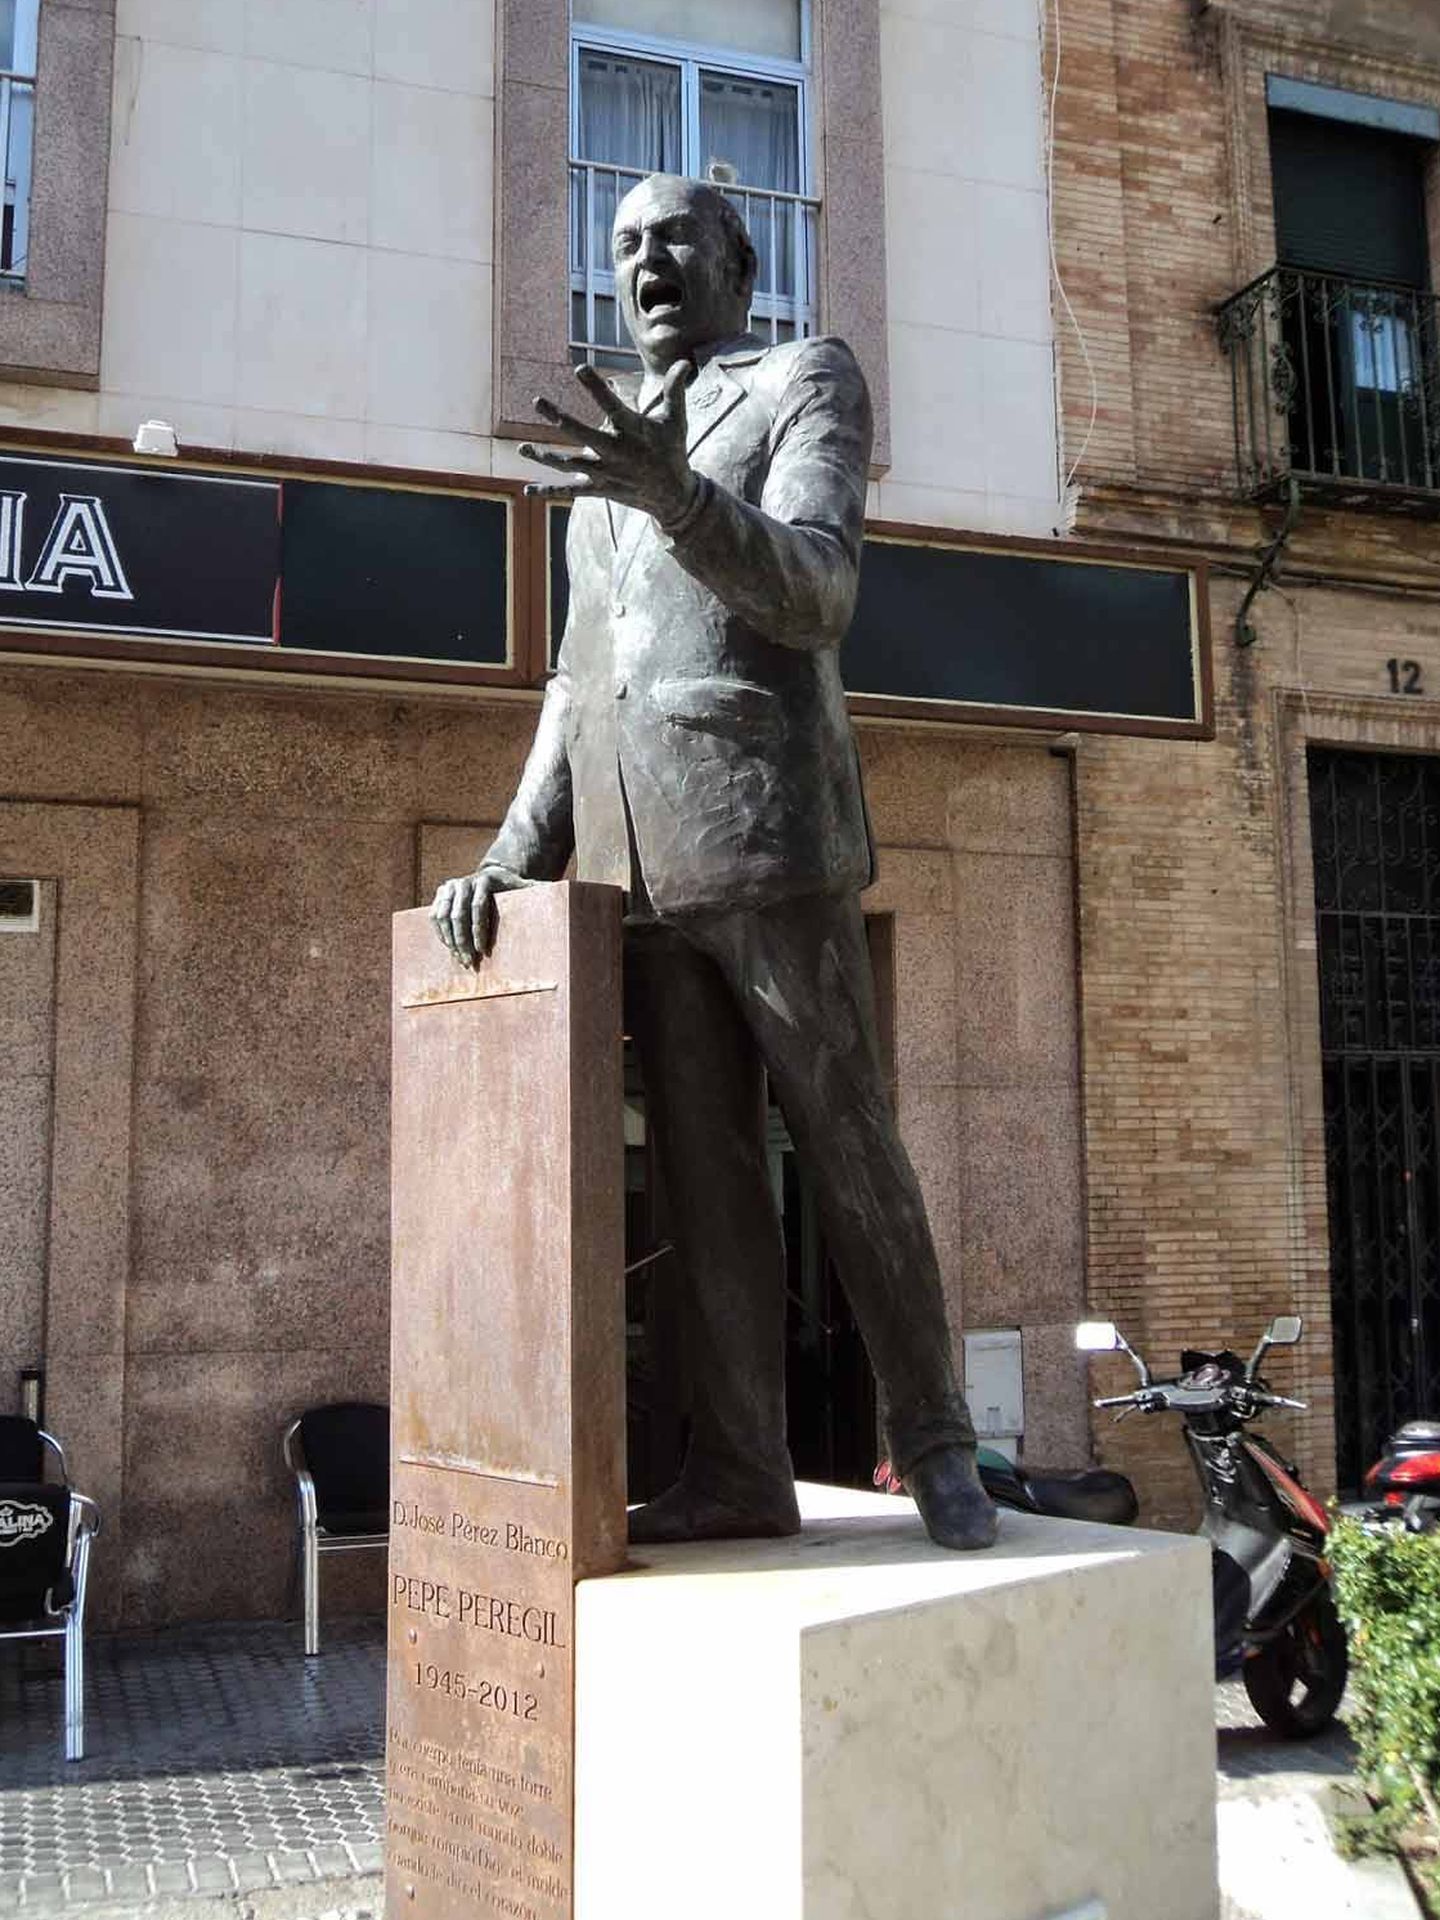 Monumento al cantaor Pepe Perejil, de José Antonio Navarro Arteaga. (navarroarteaga.com)